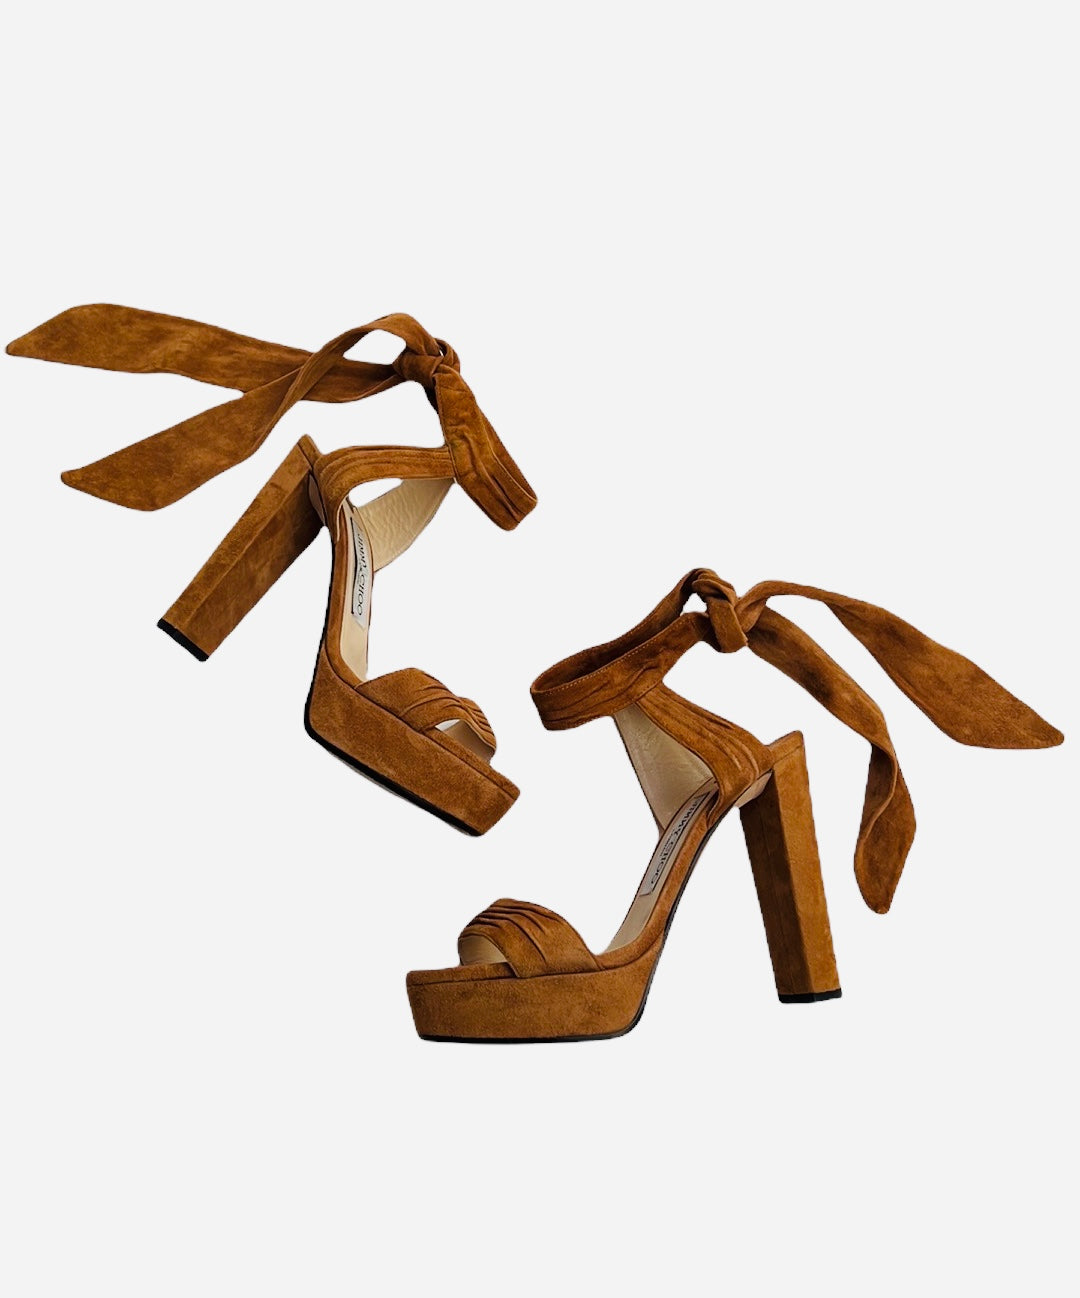 Camel Suede Sandals - 6.5